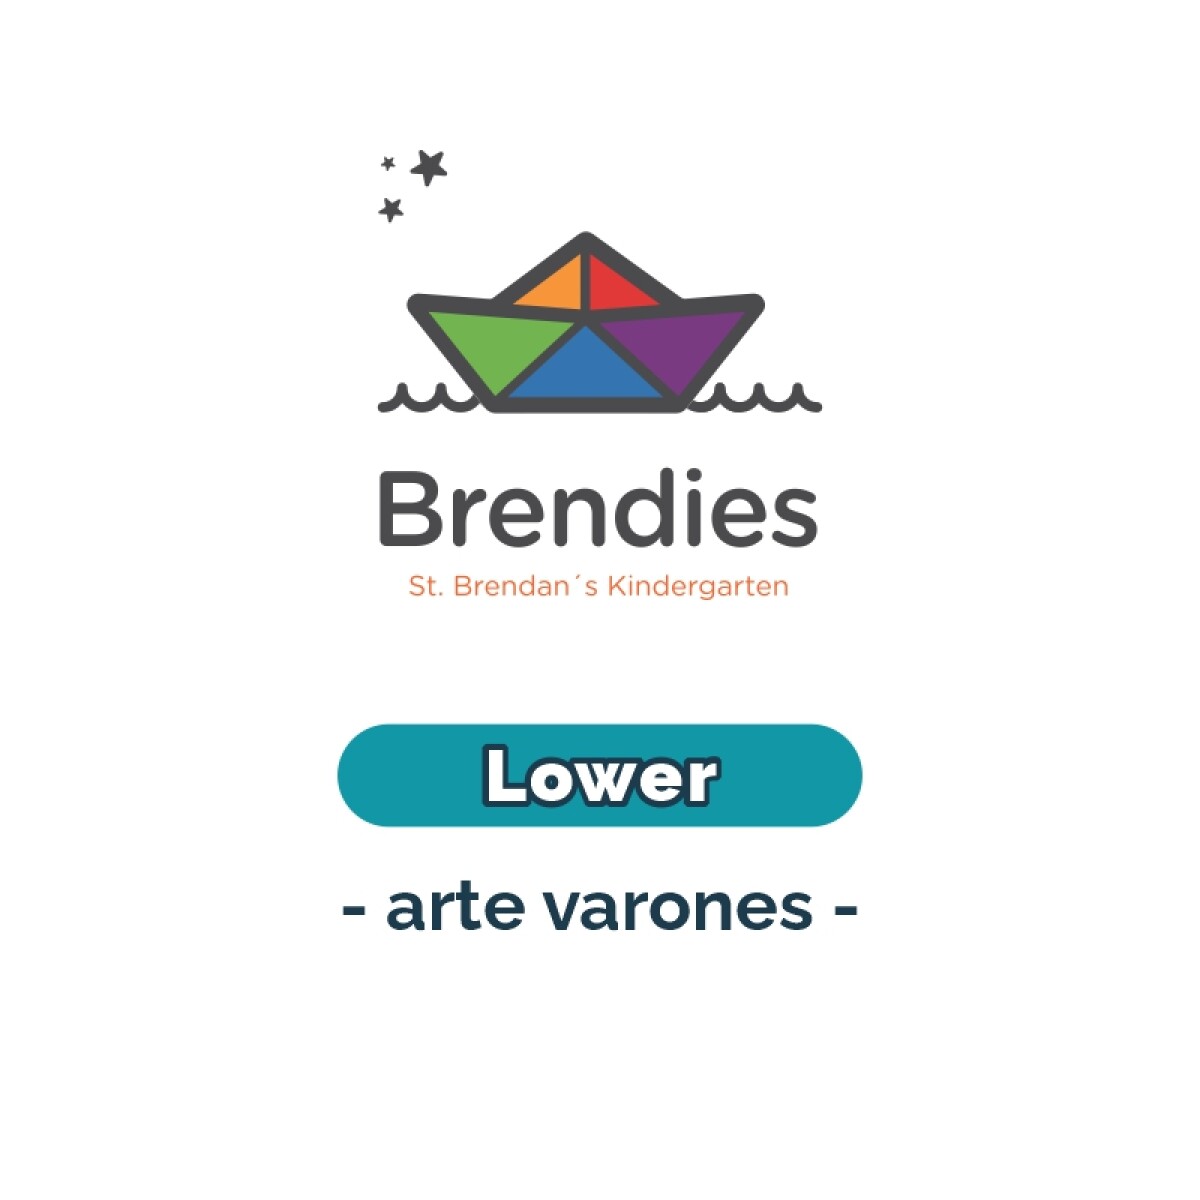 Lista de materiales - Brendies Lower arte varones SB 